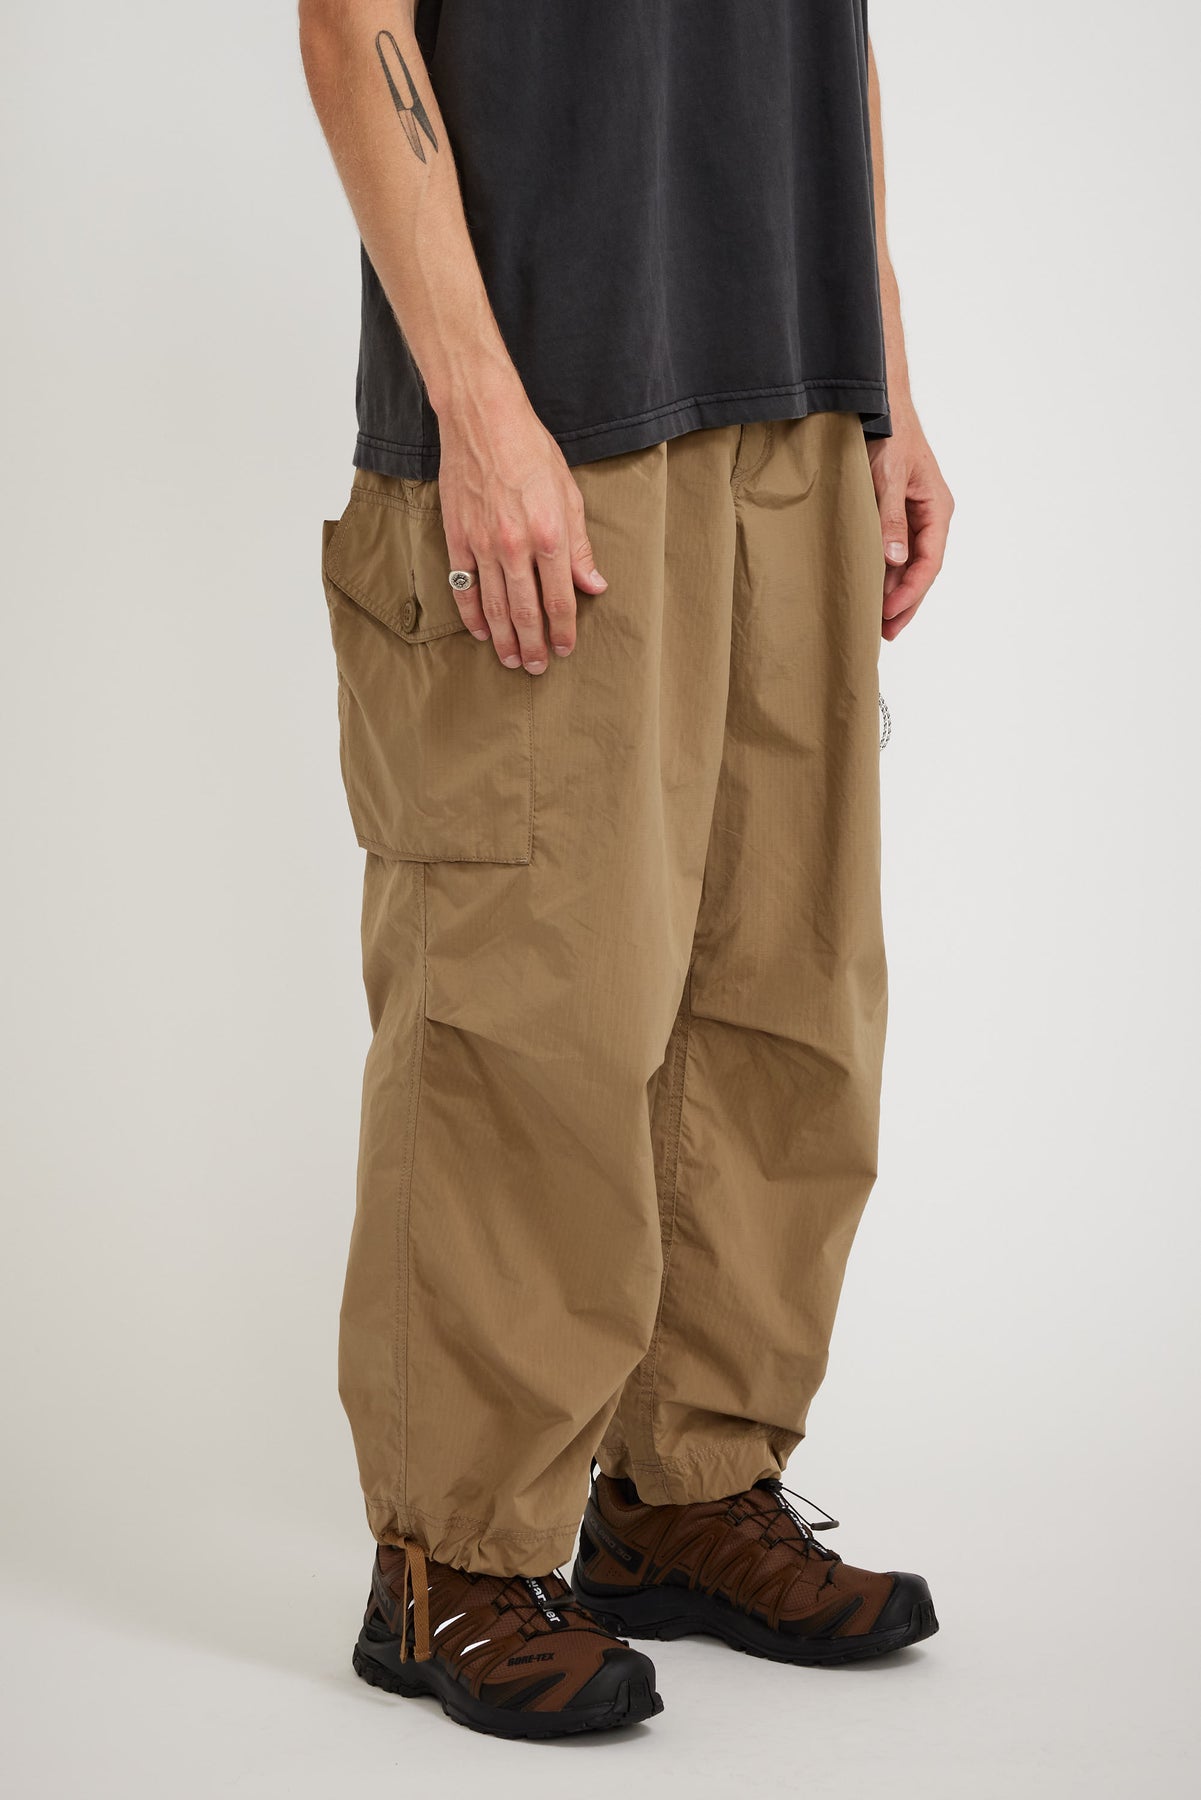 Simmy Black Oversized Cargo Pants – LA CHIC PICK